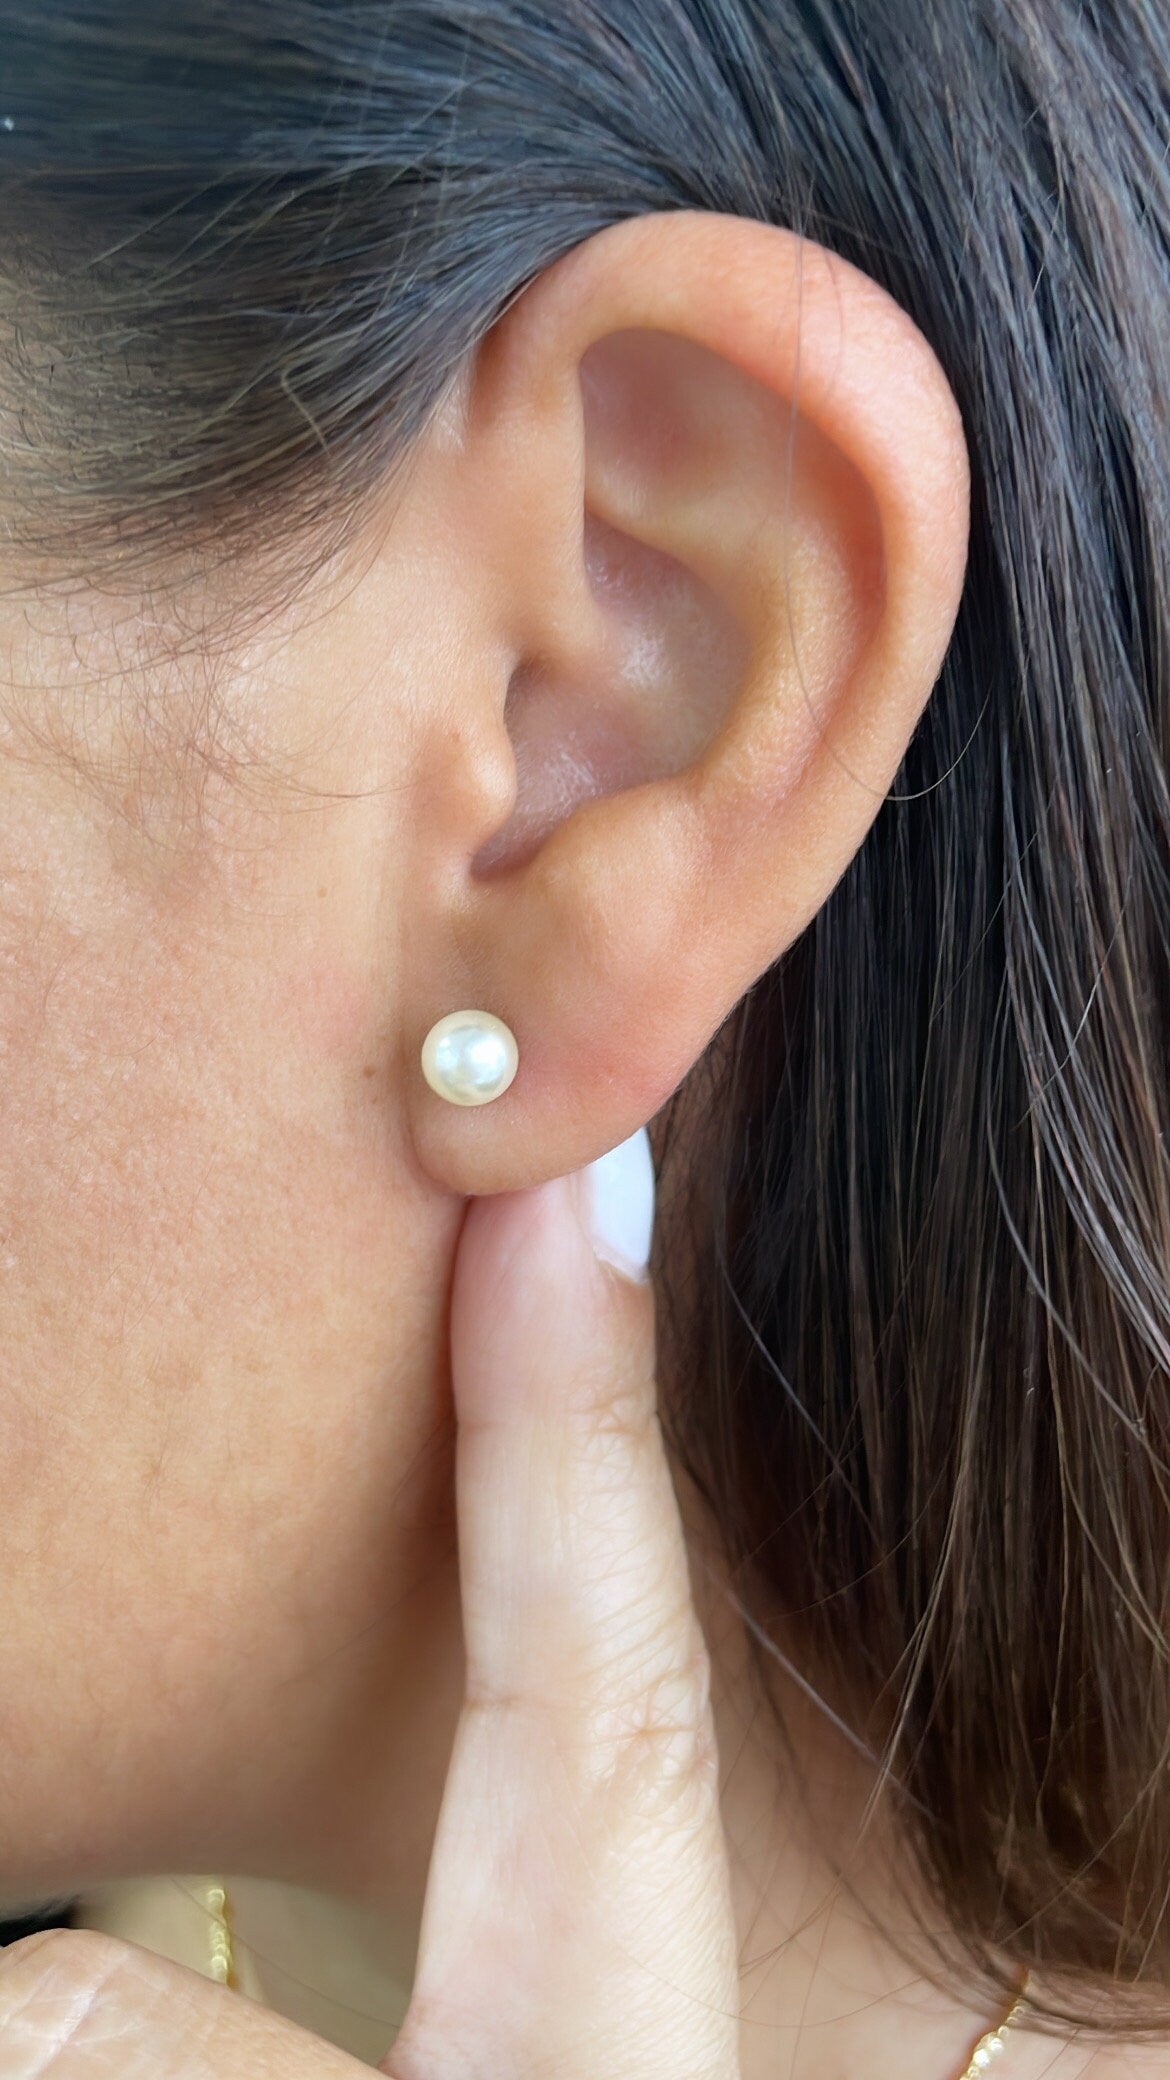 18k Gold Filled Plain Simulated Pearl Stud Earrings Jewelry Making Supplies, Dainty Studs, Small Stud, Pearl Jewlery